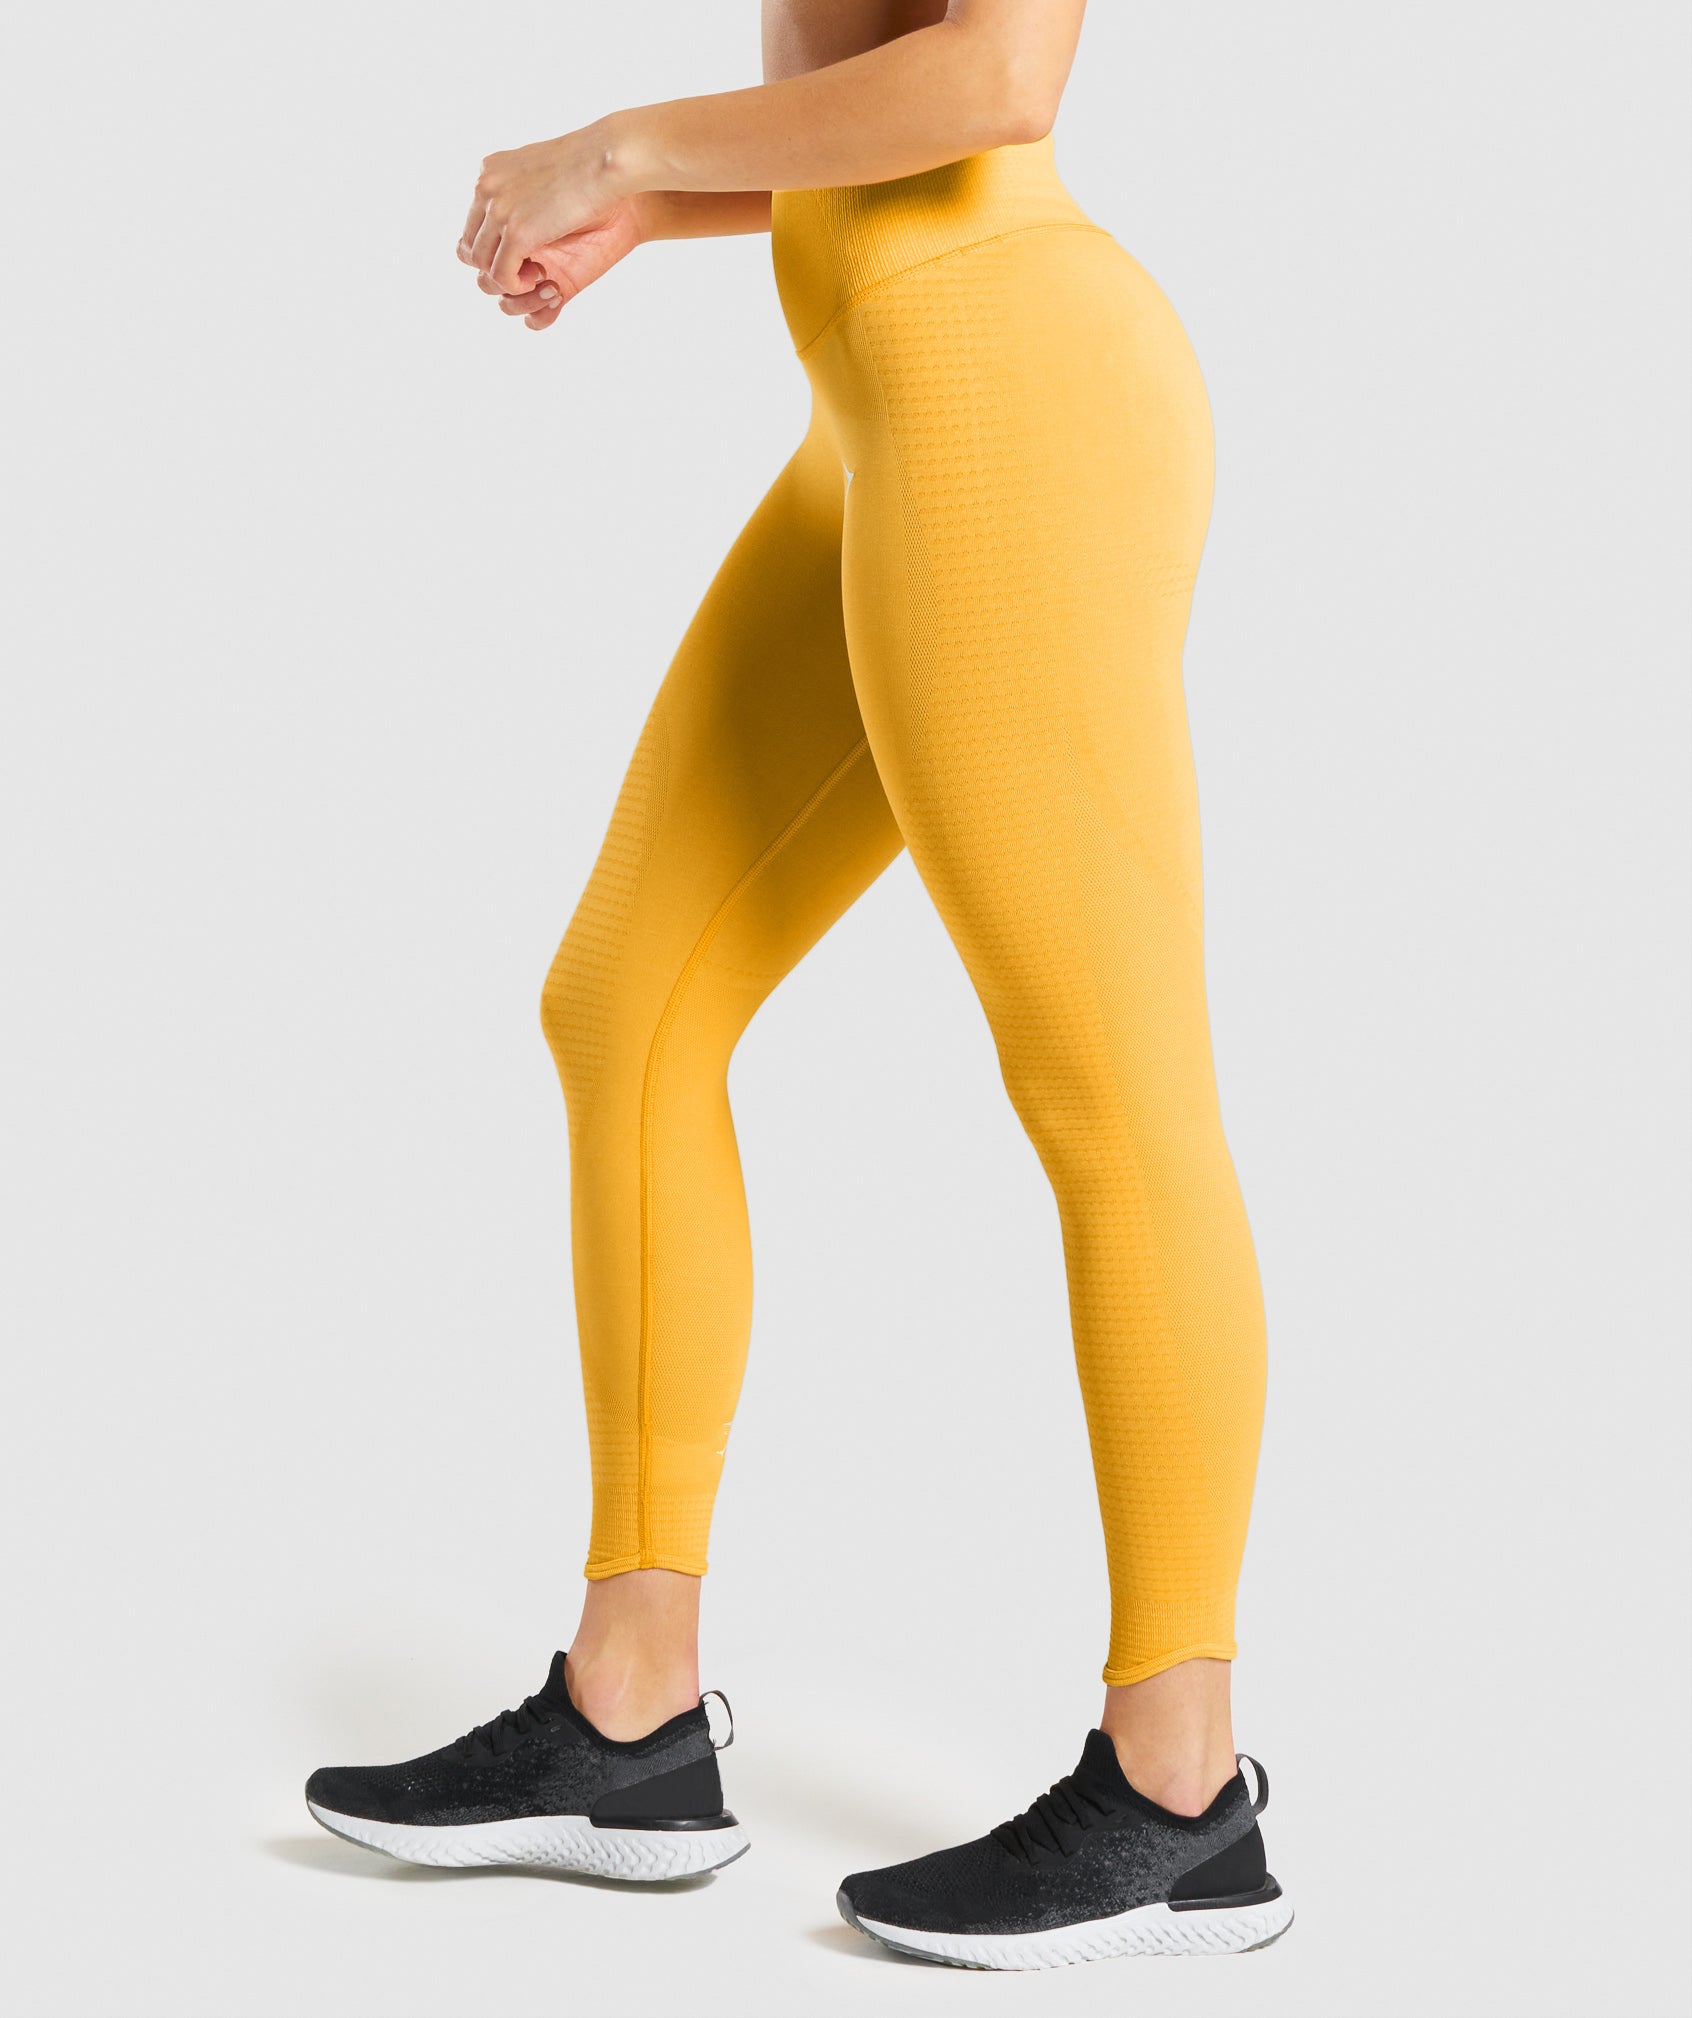 Gymshark Flex High Waisted Leggings. Yellow Marl. Size M